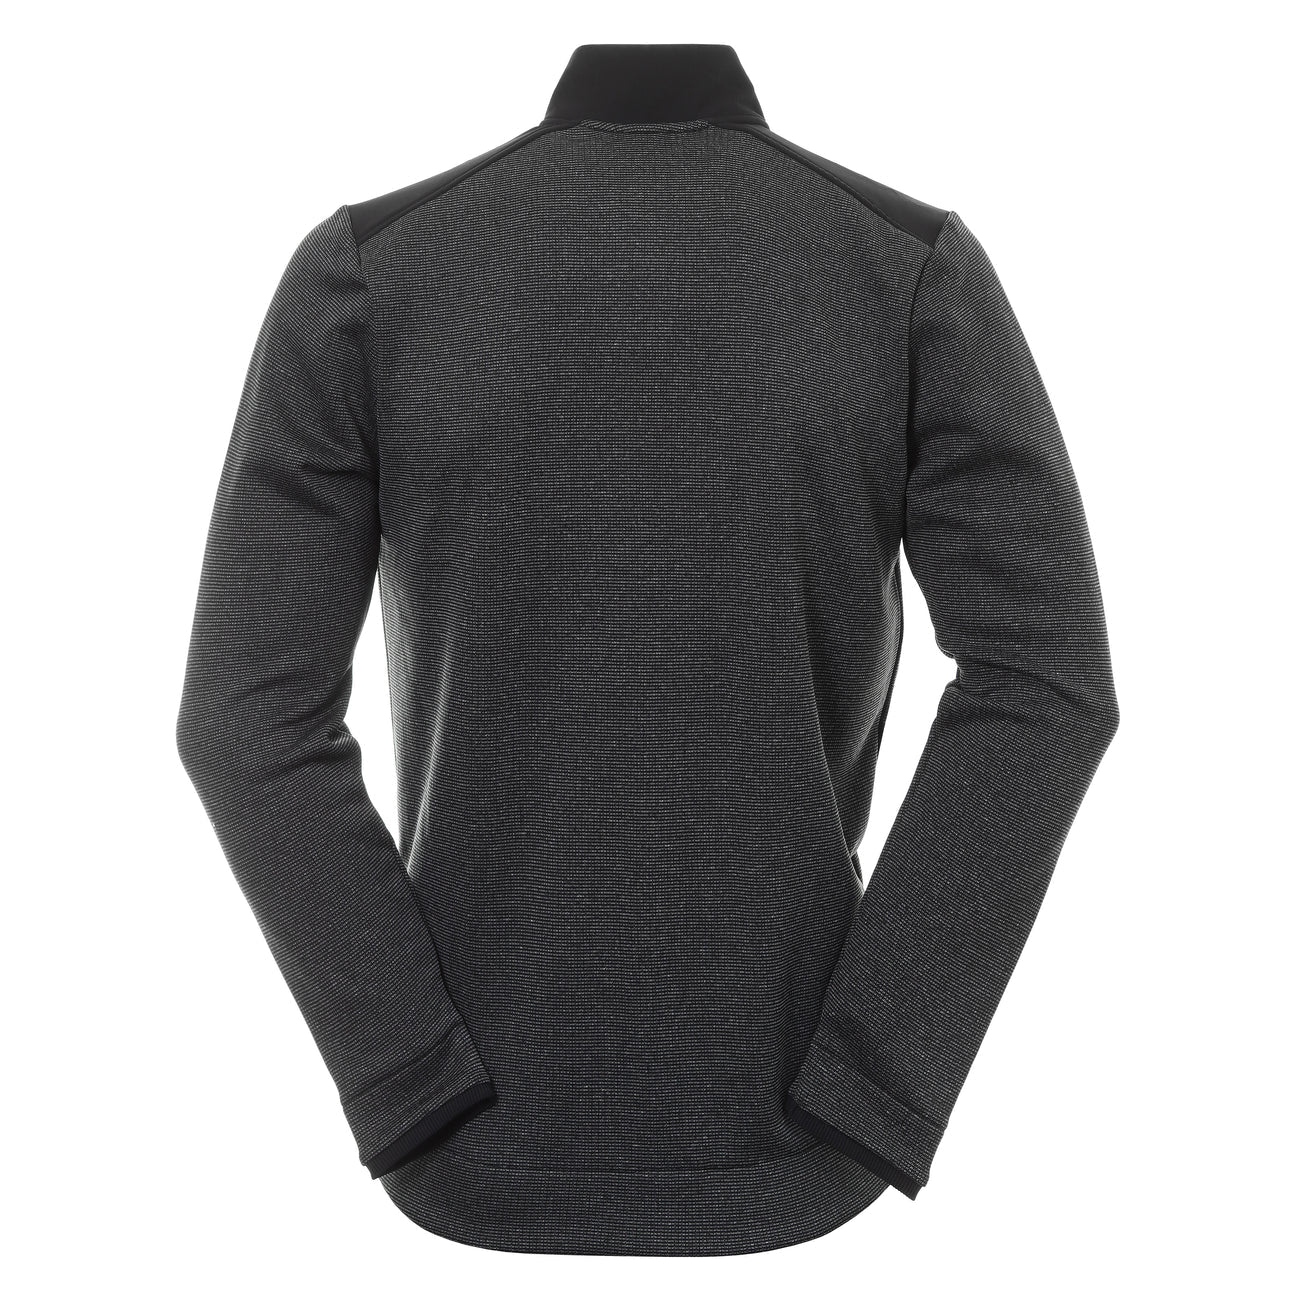 Under Armour Golf Storm Novelty Sweater Fleece 1/2 Zip